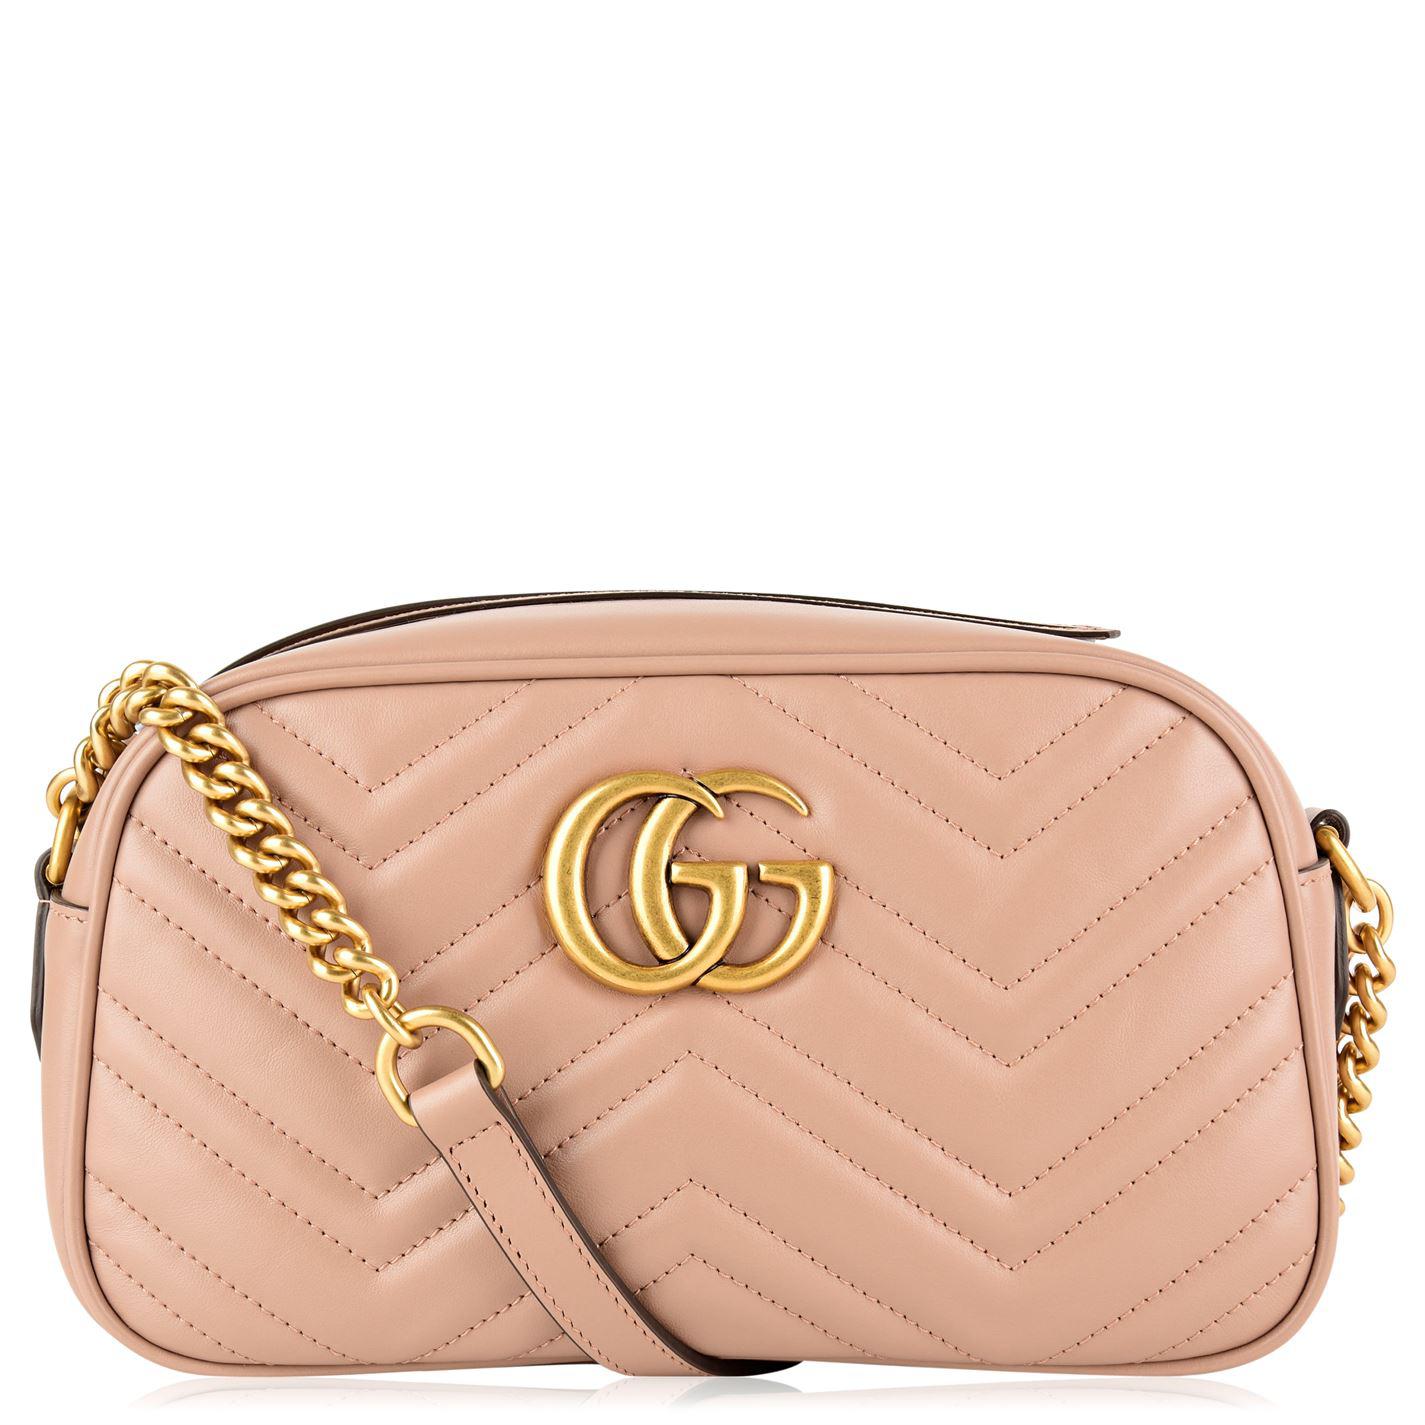 Lyst - Gucci Marmont Matelasse Mini Bag